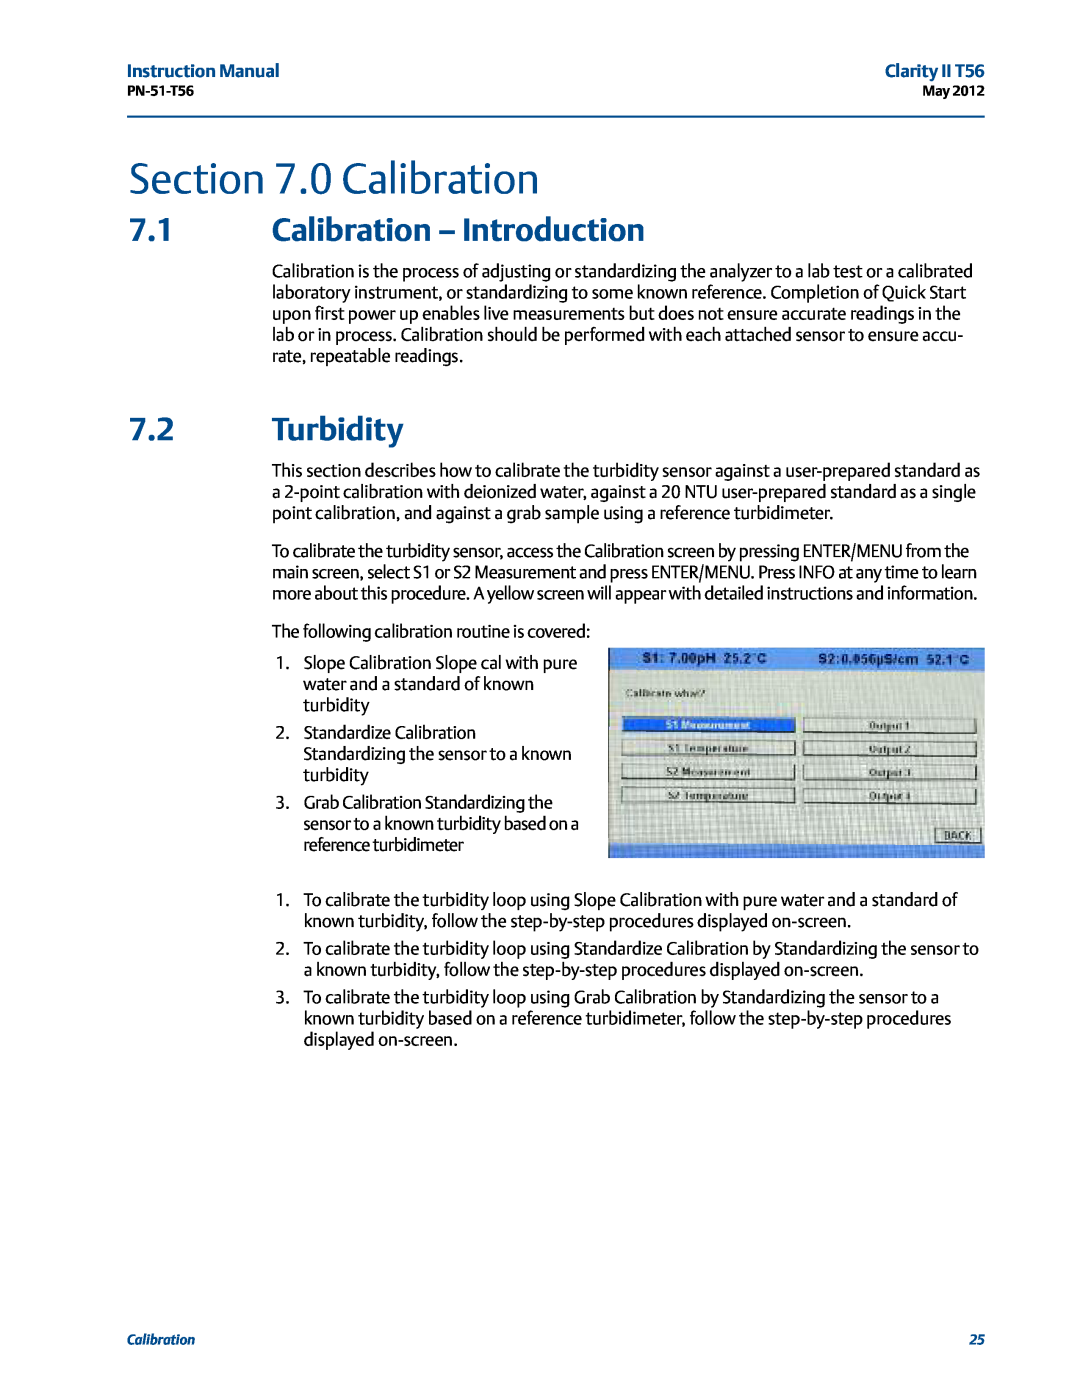 Emerson PN-51-T56 instruction manual 0 Calibration, Calibration - Introduction, Turbidity 